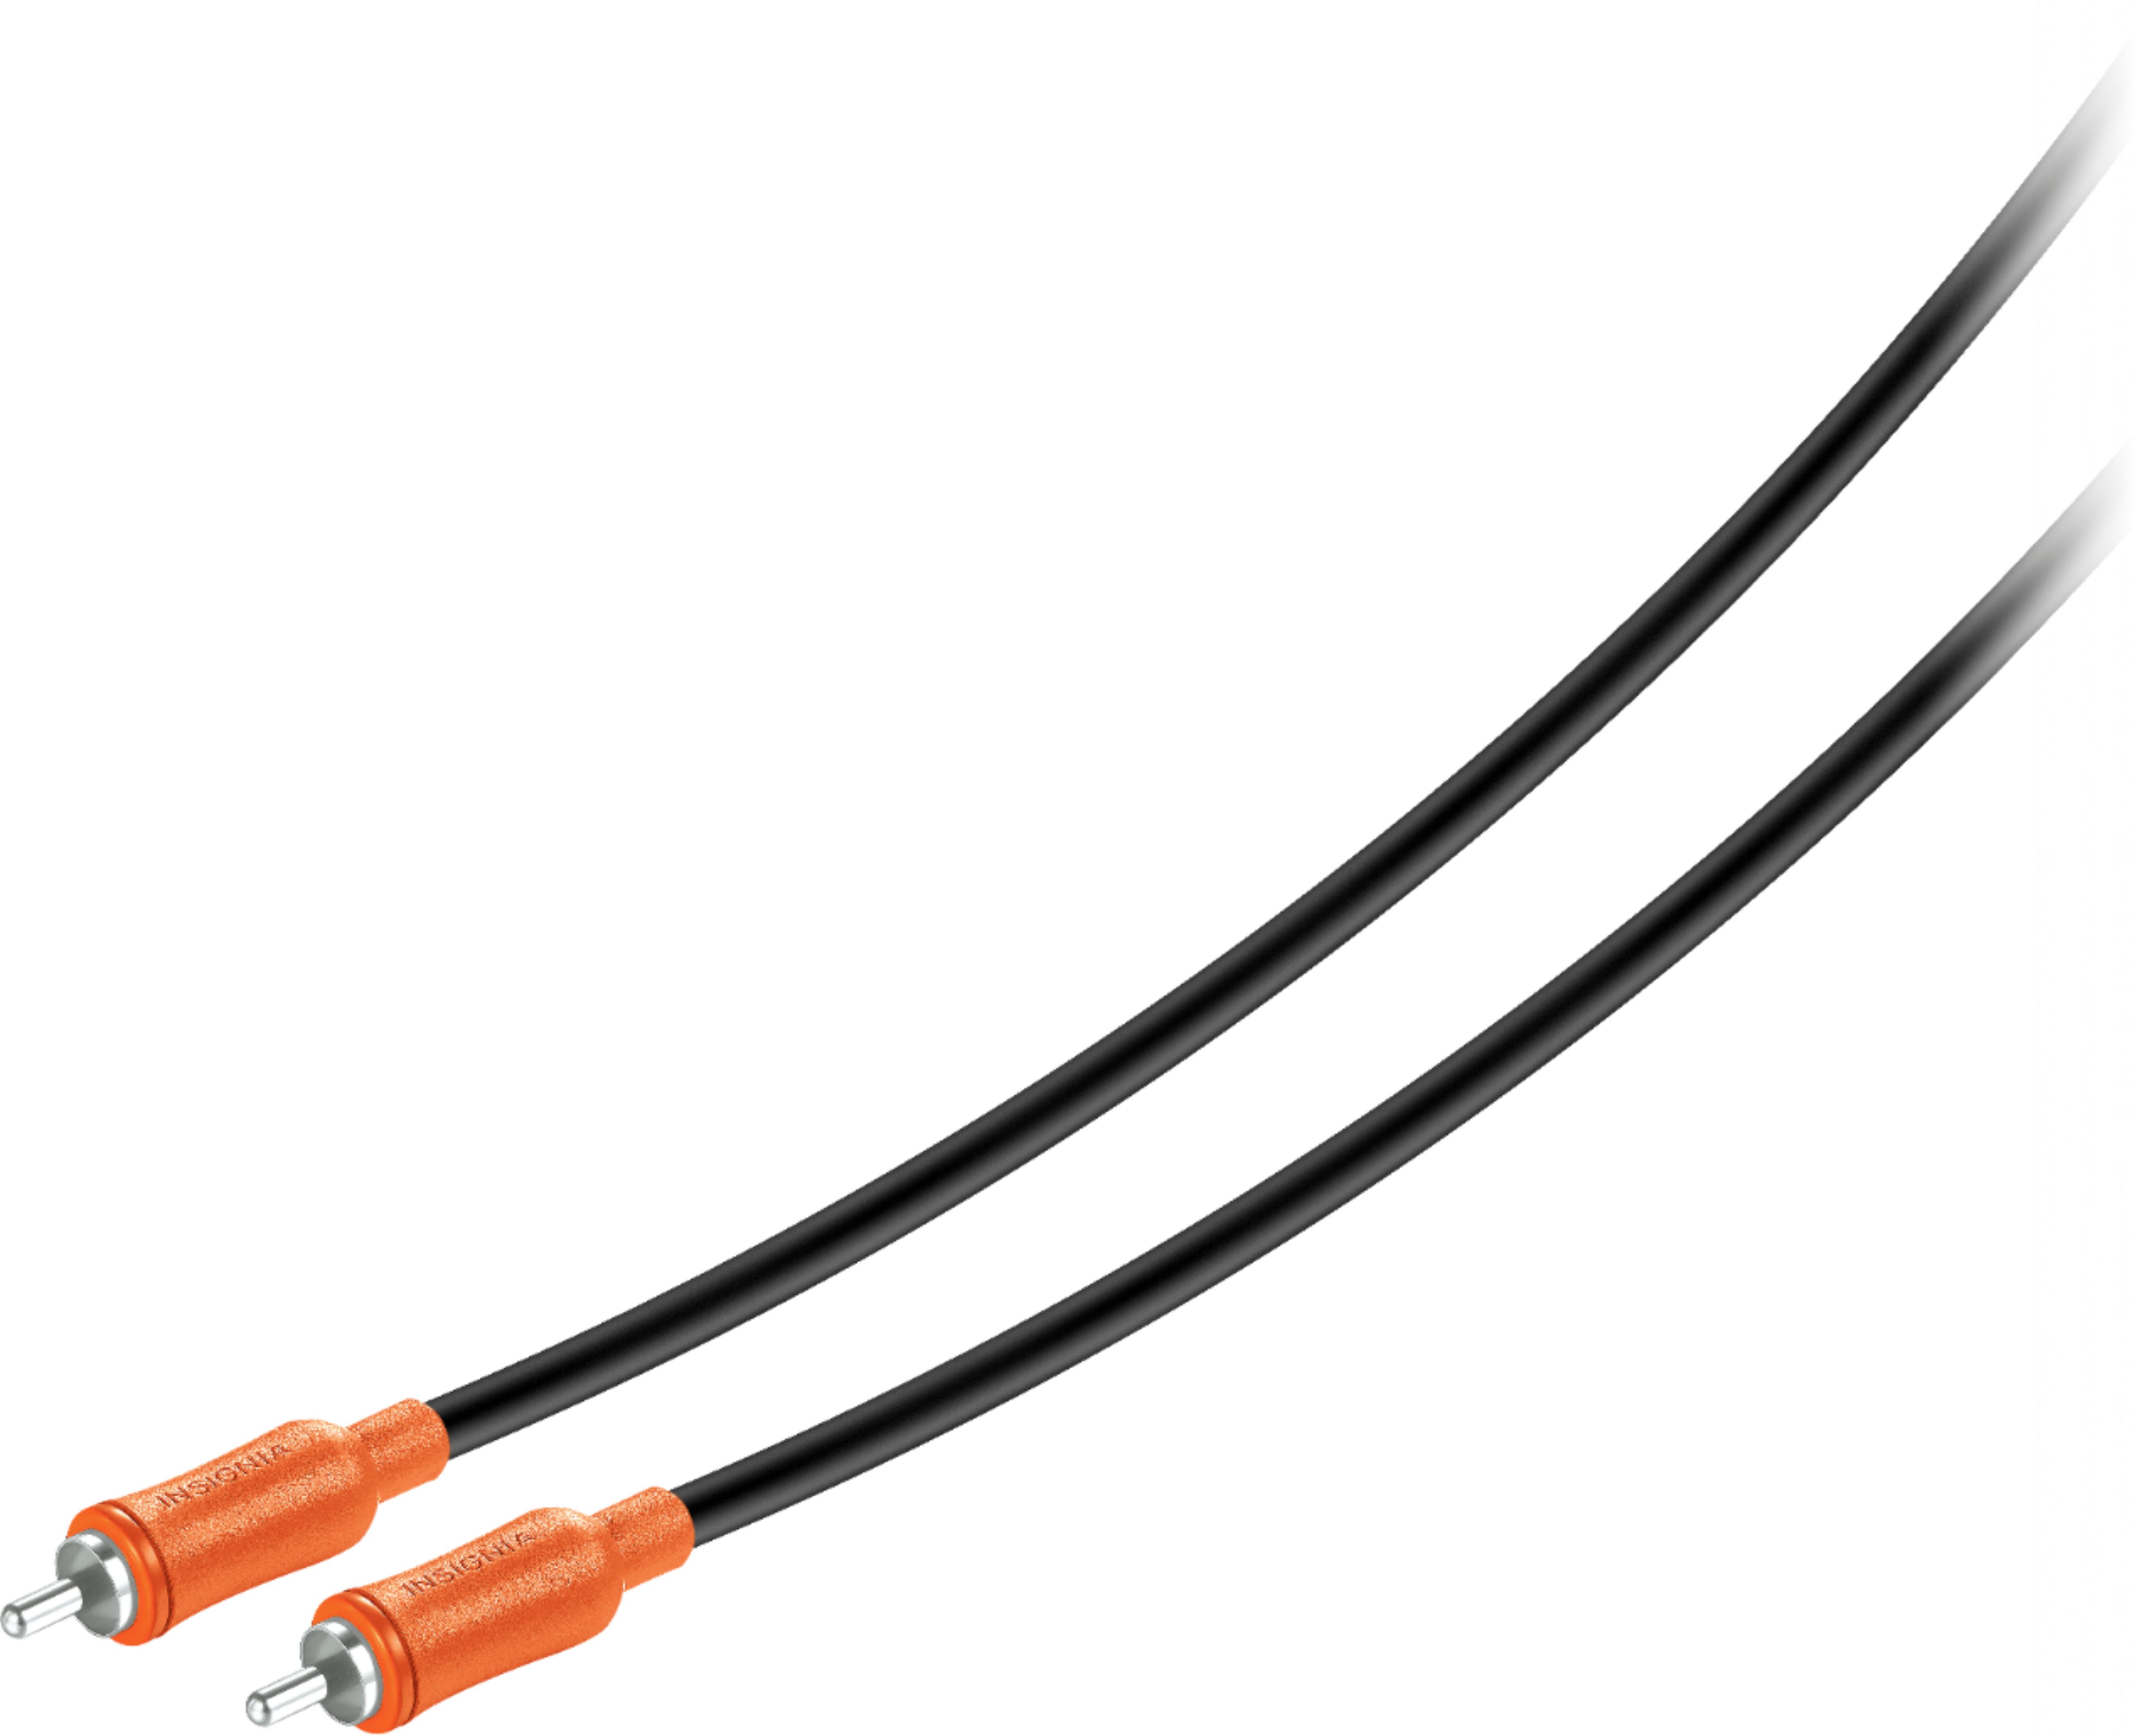 SPEC BLACK 6 .120 T cable 6.6 CV